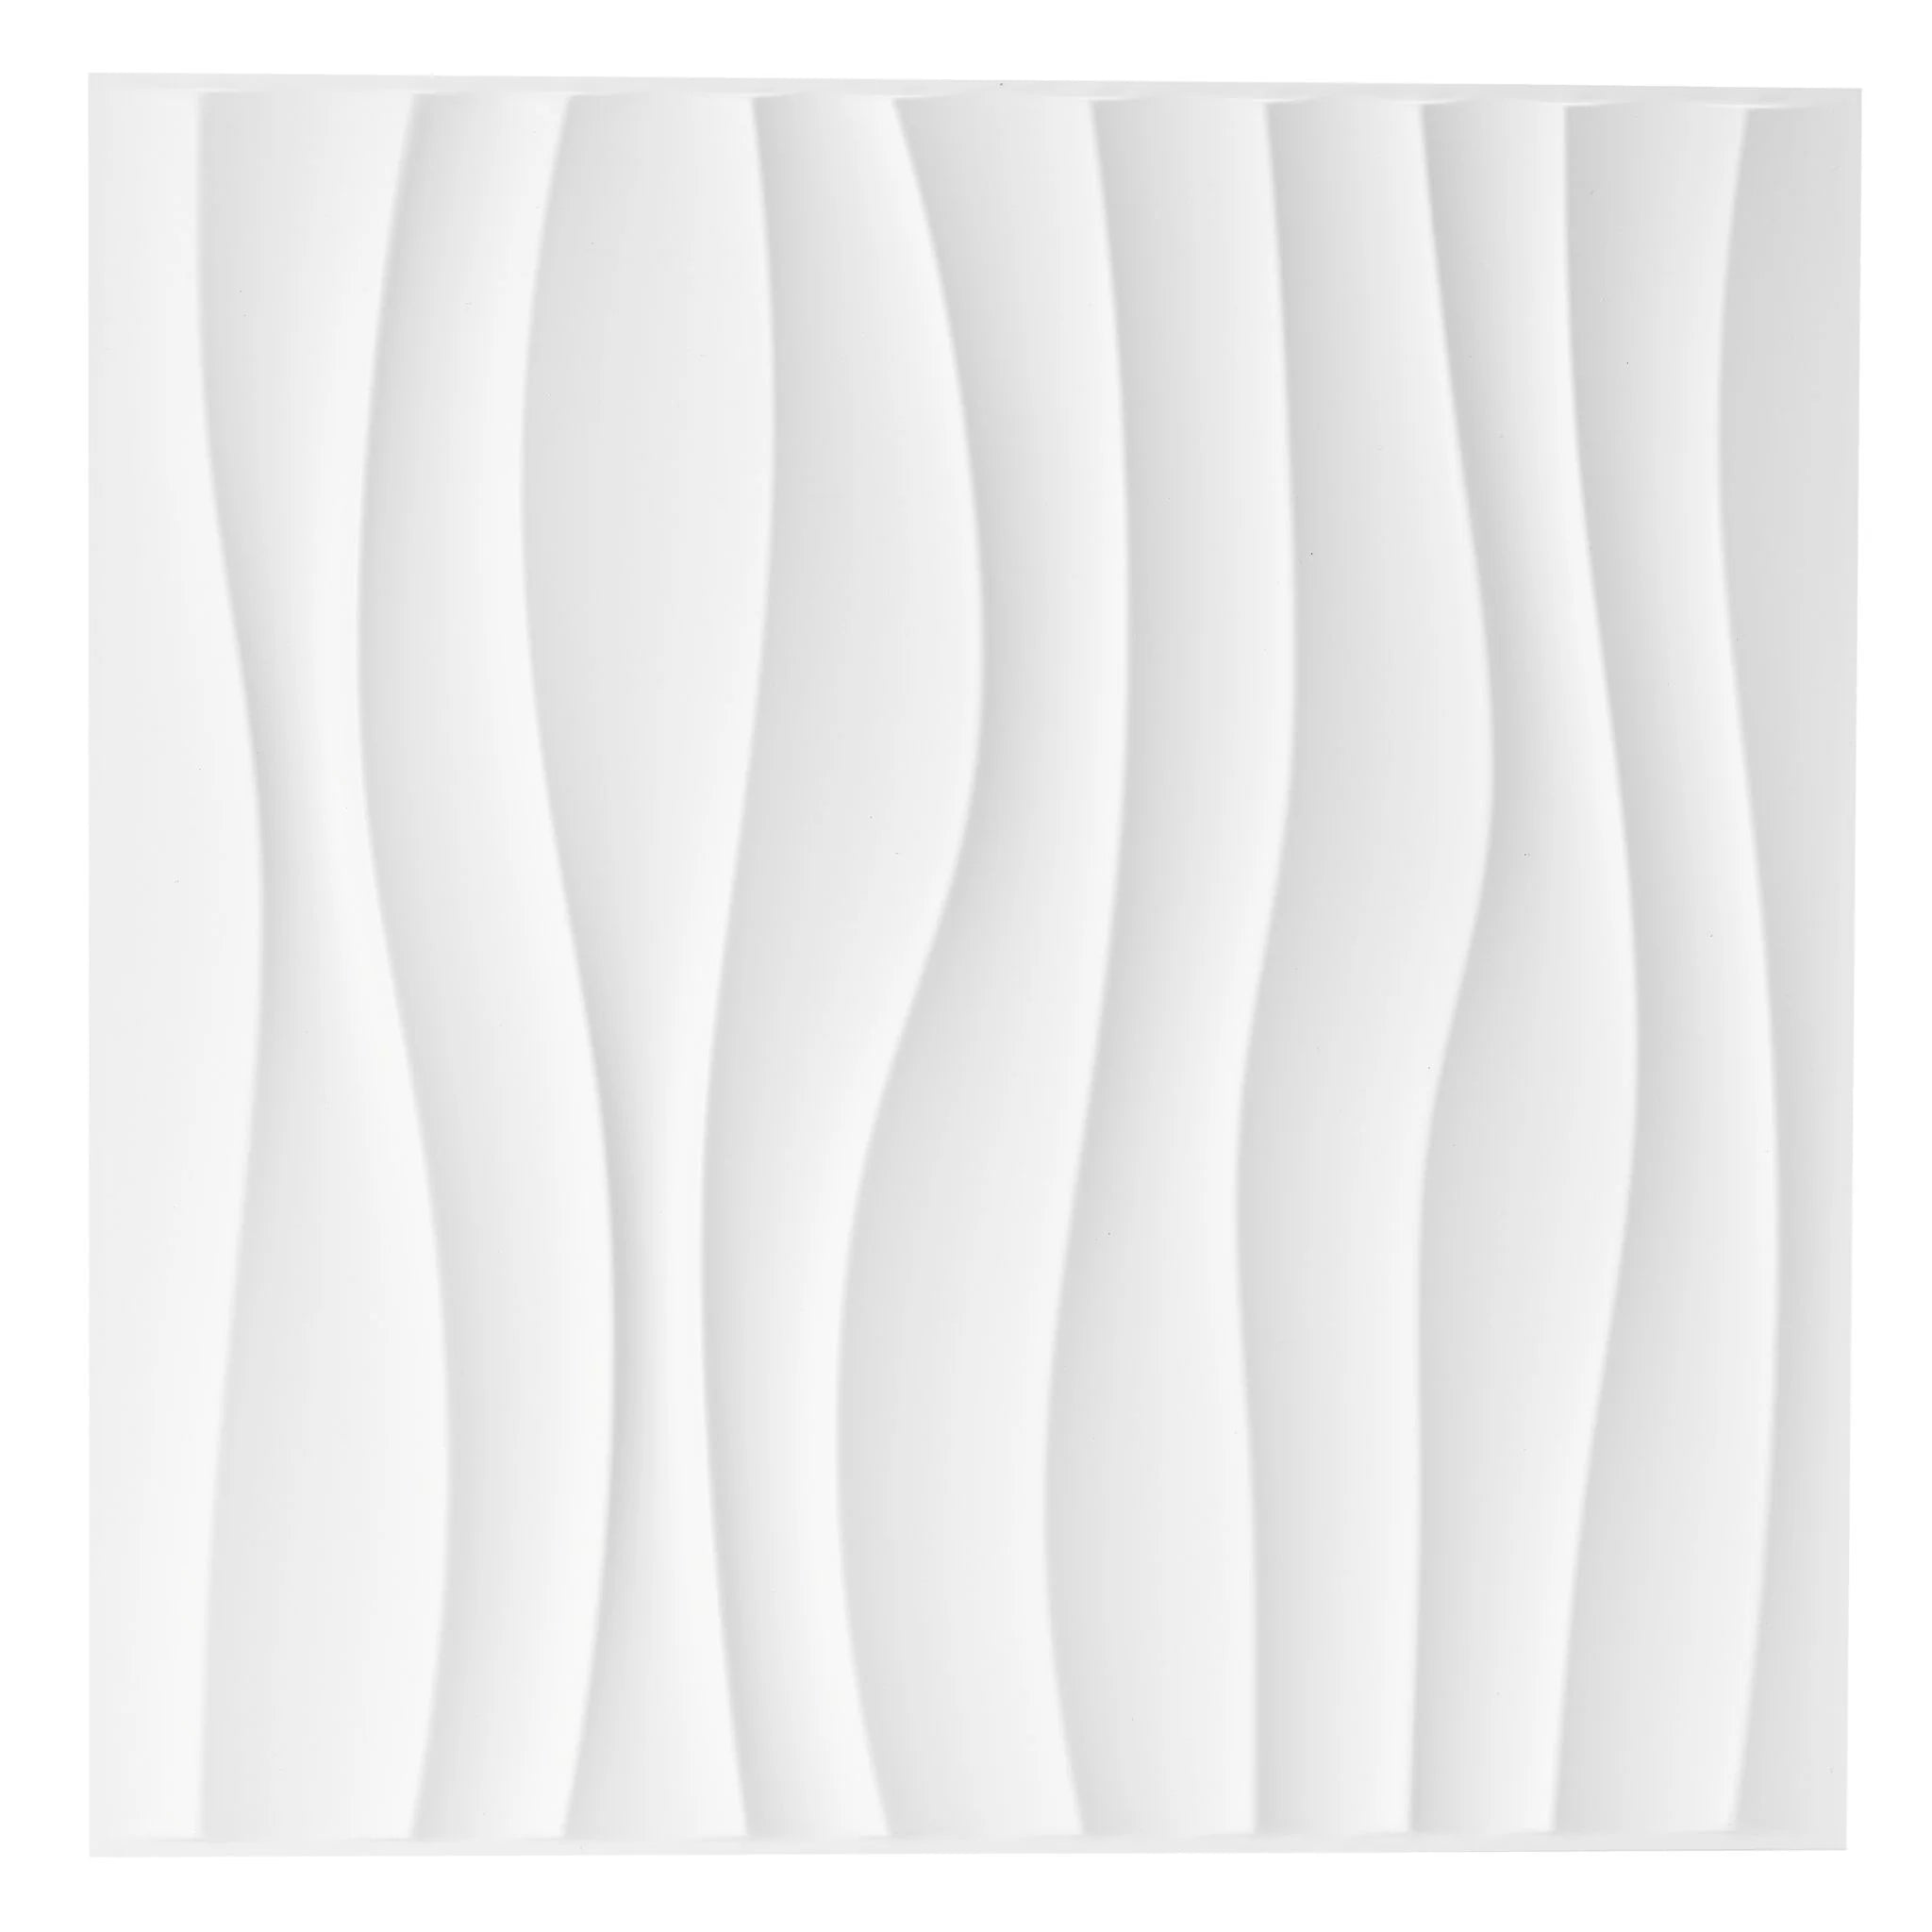 Detailed view of white PVC wall panel showcasing wavy design